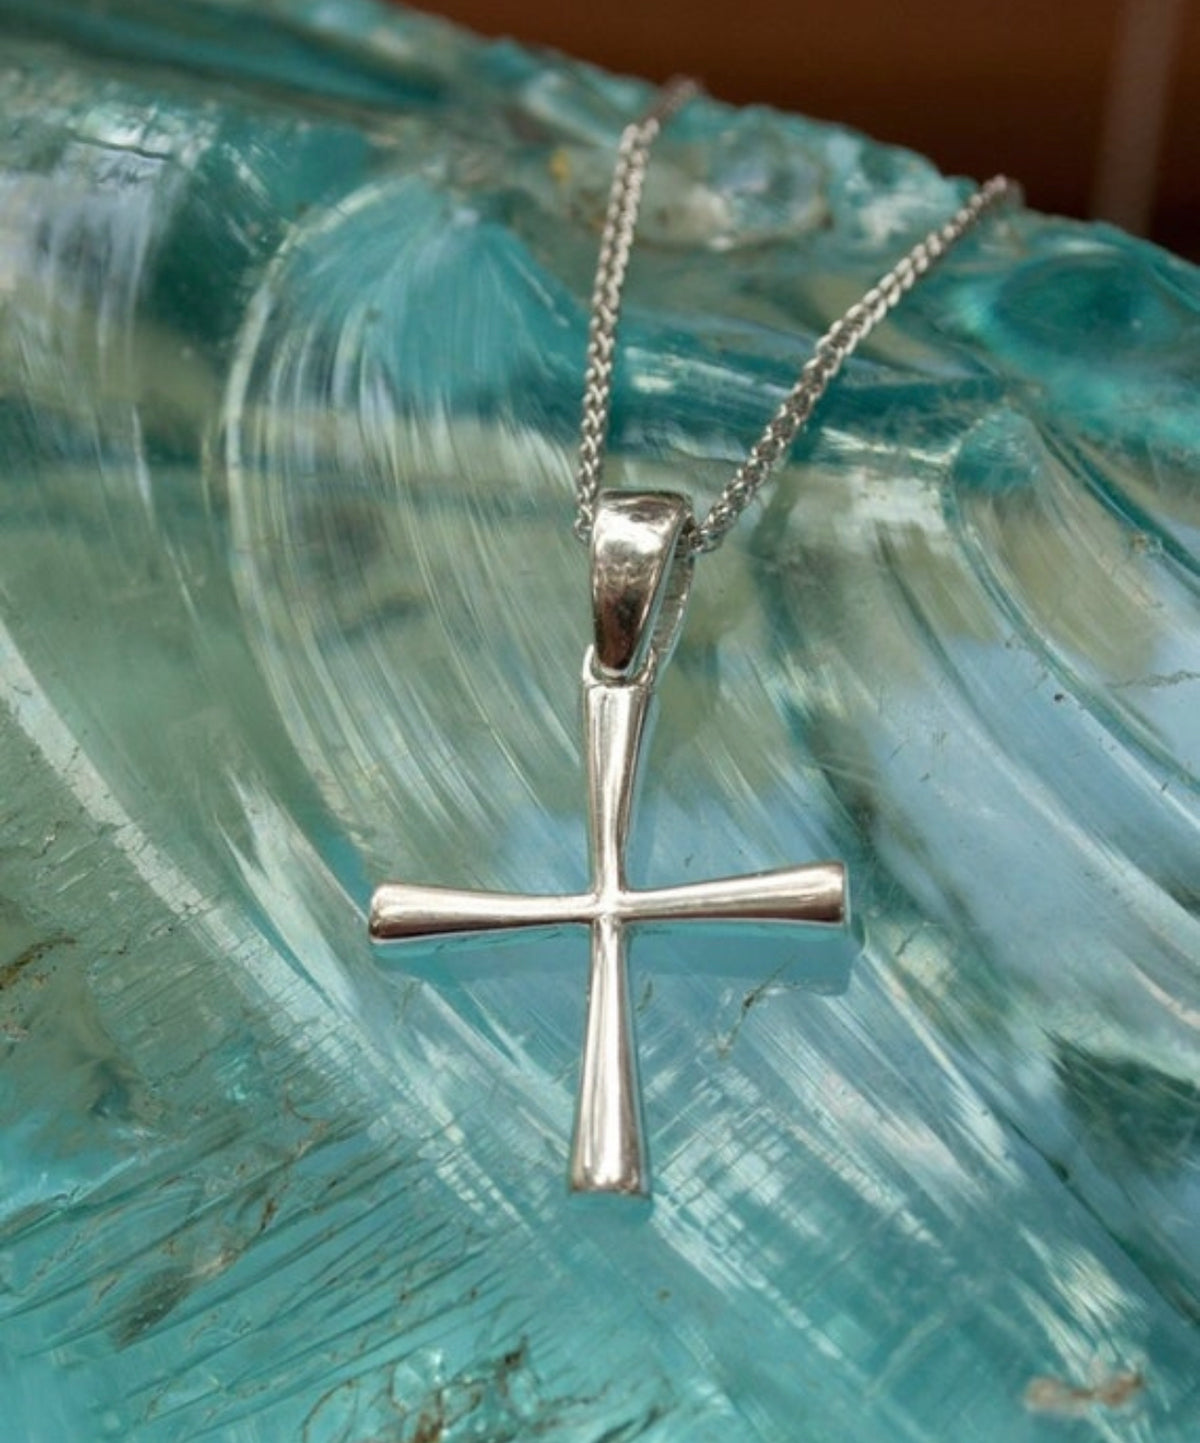 Small cross necklace silver, Byzantine cross